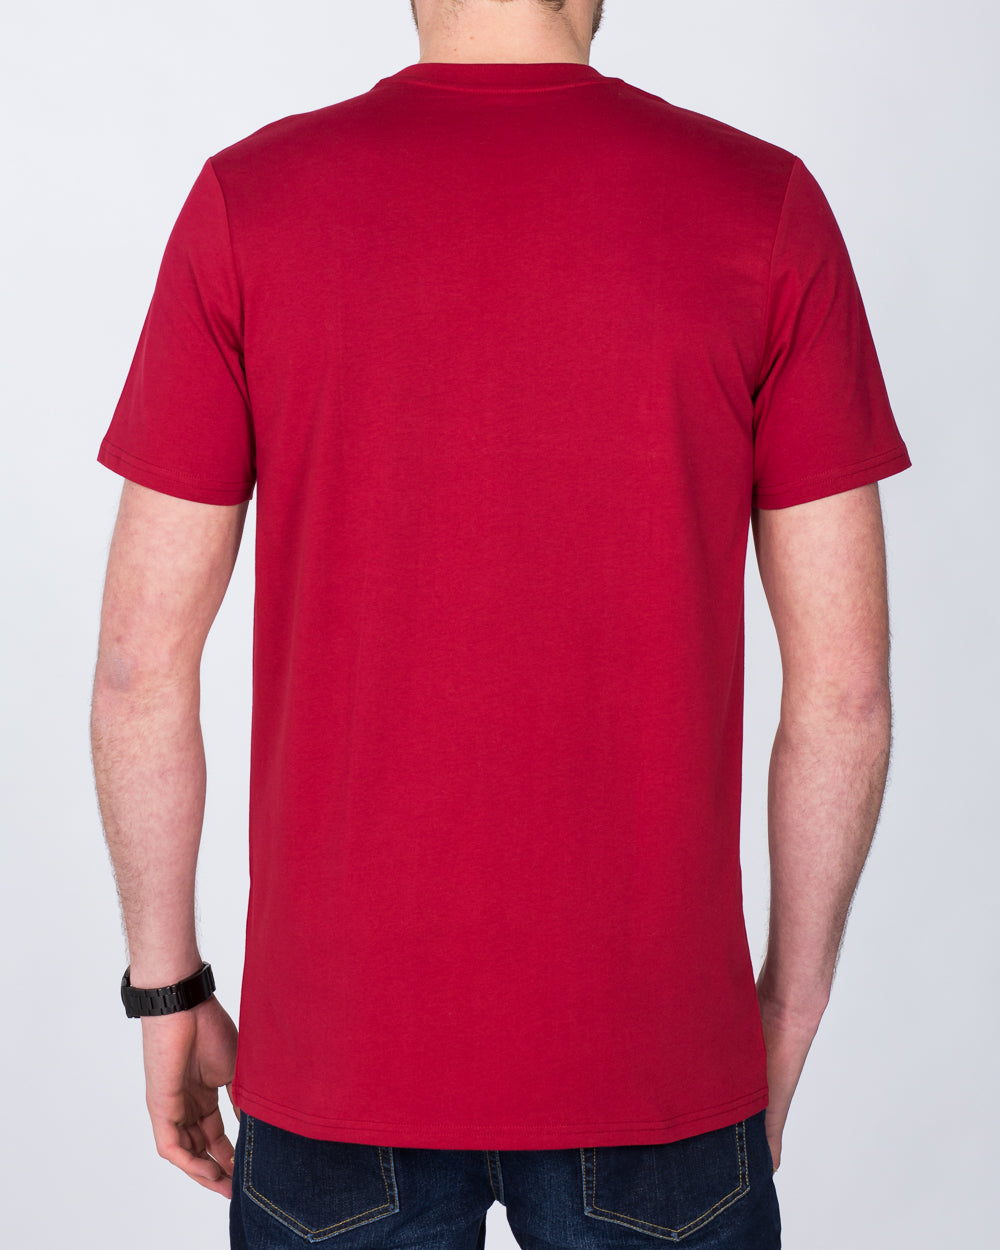 Girav Sydney Tall T-Shirt (red)